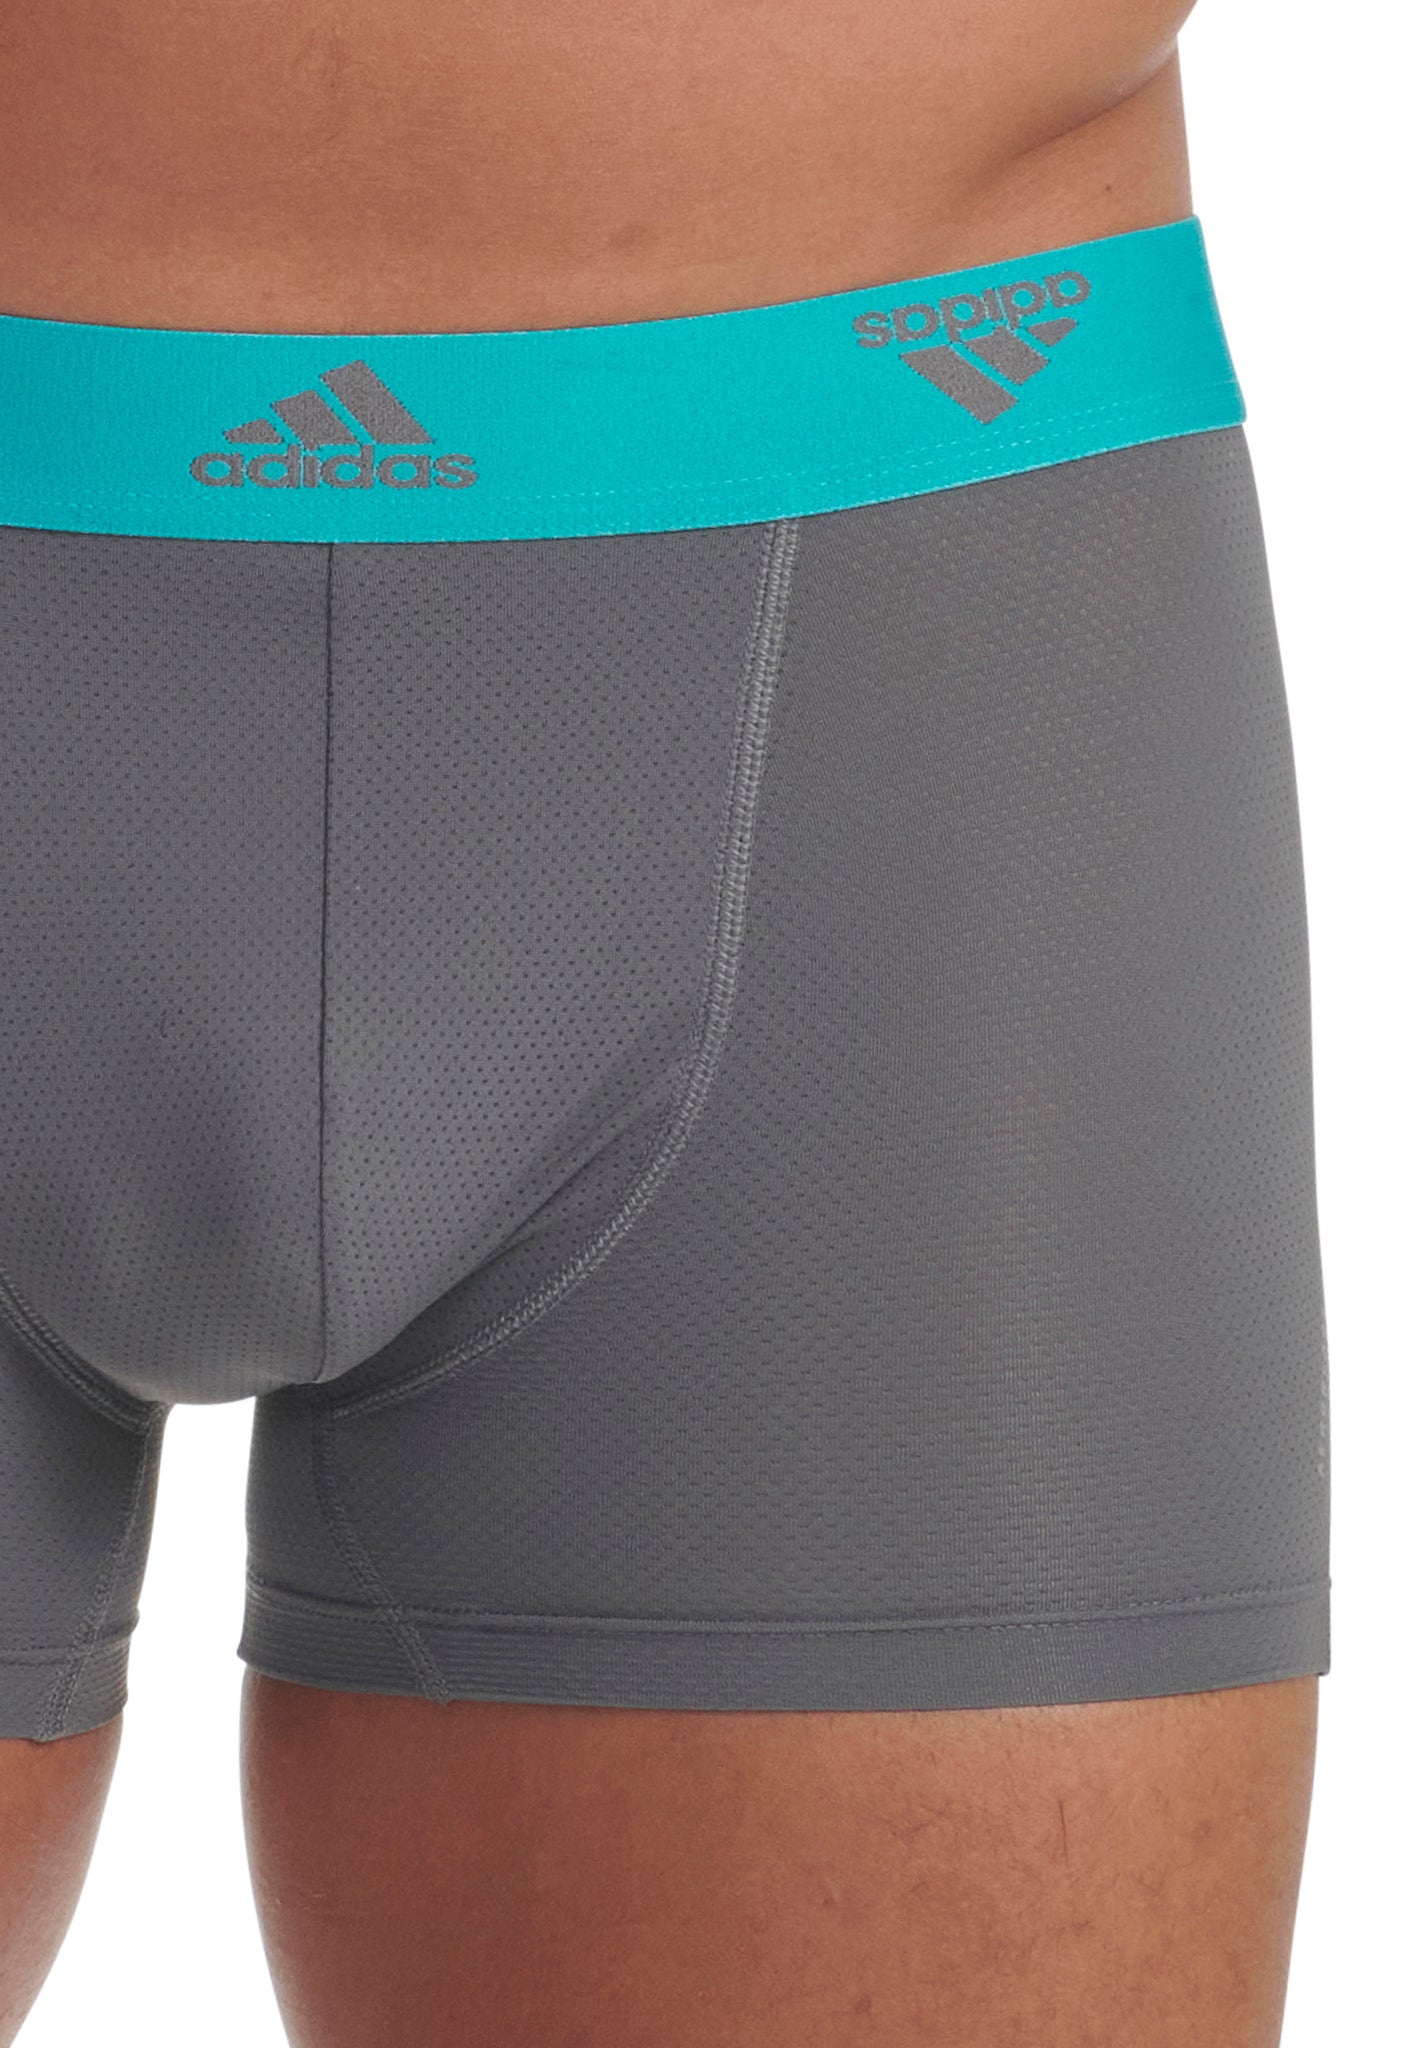 Buy Micro Flex Vented Trunks 2 Pairs | adidas underwear